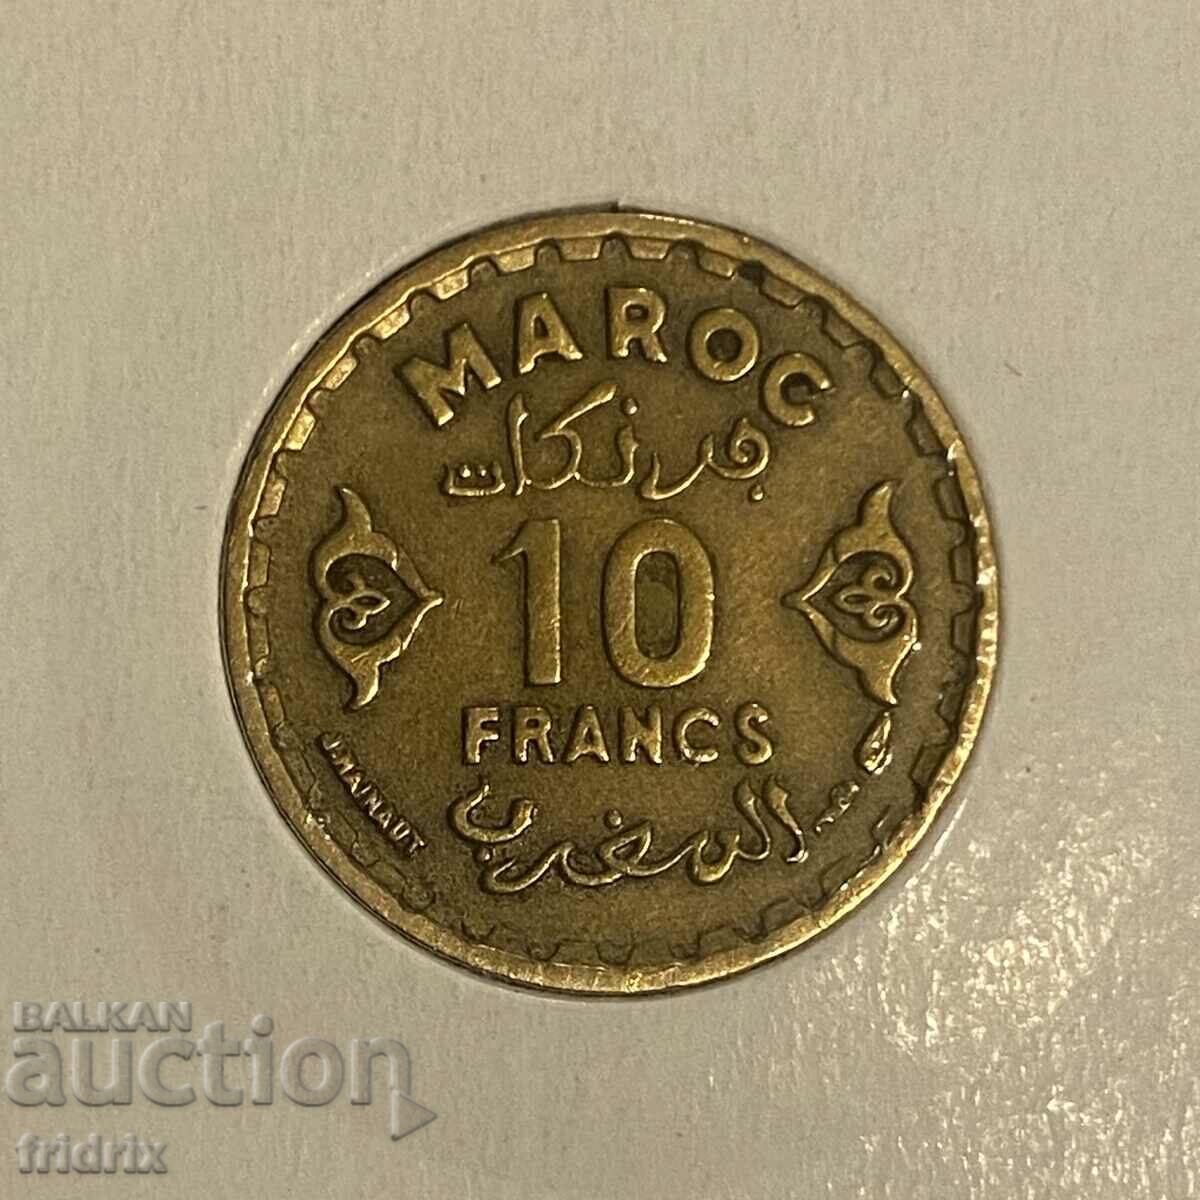 Morocco 10 francs / Morocco 10 francs 1952